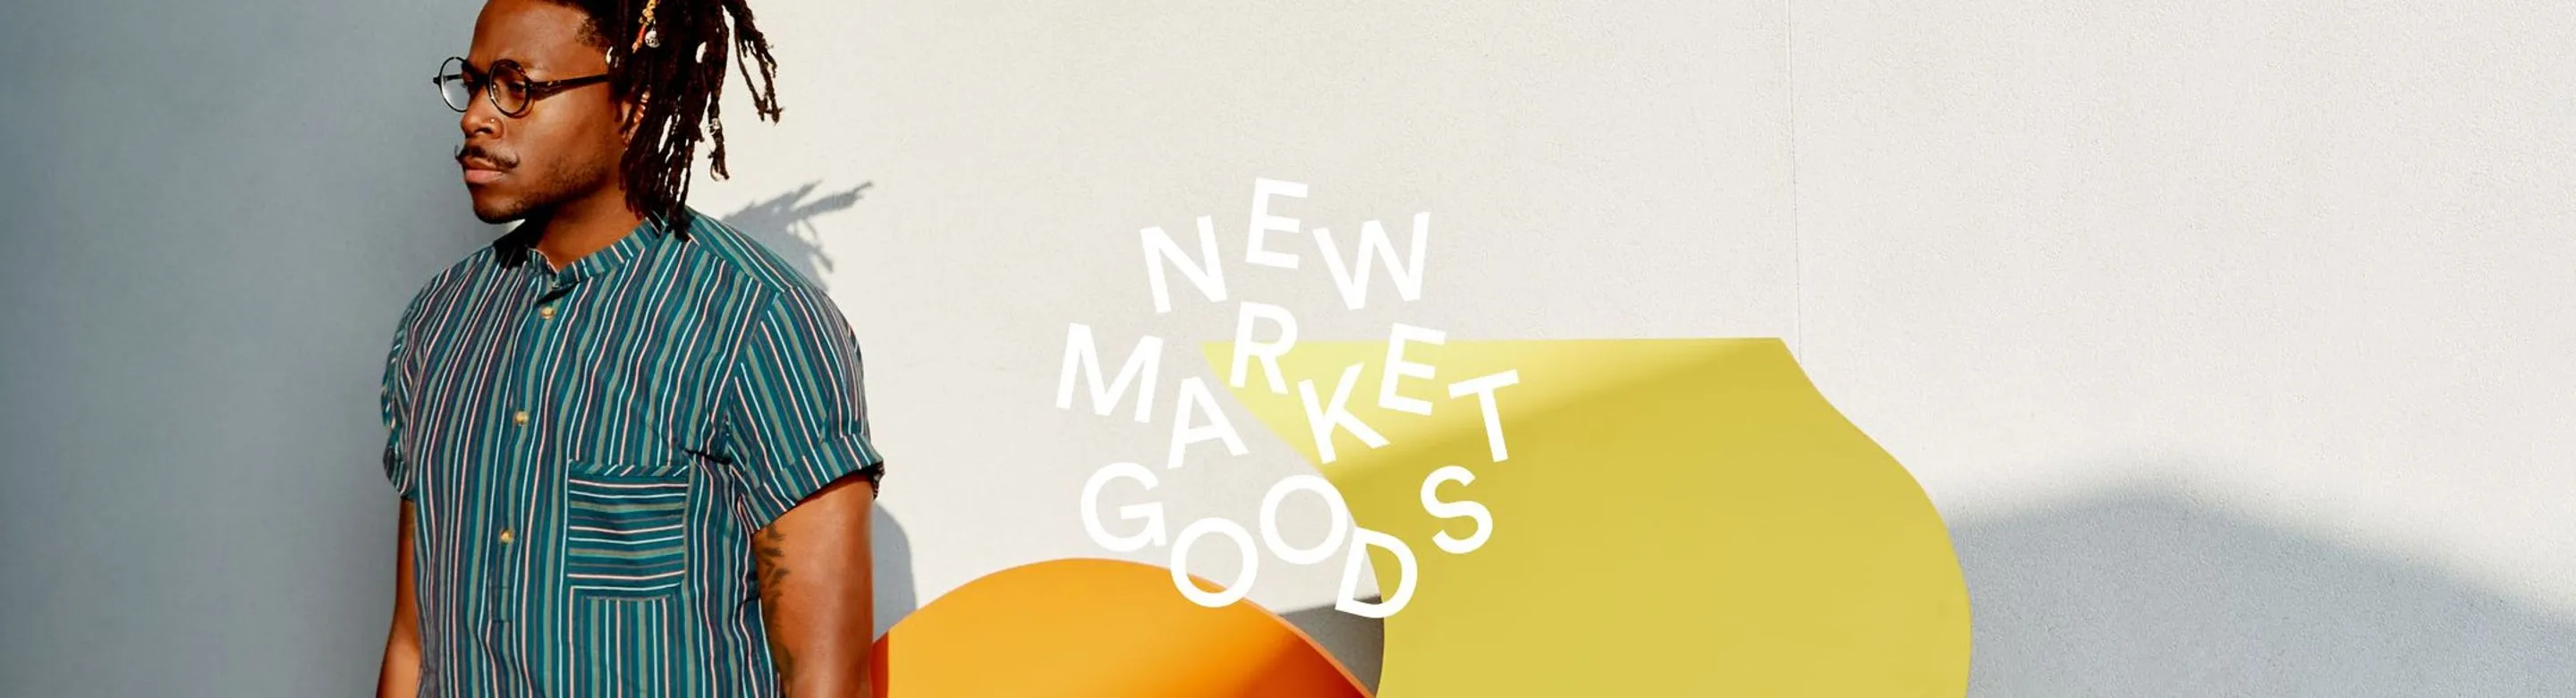 New Market Goods